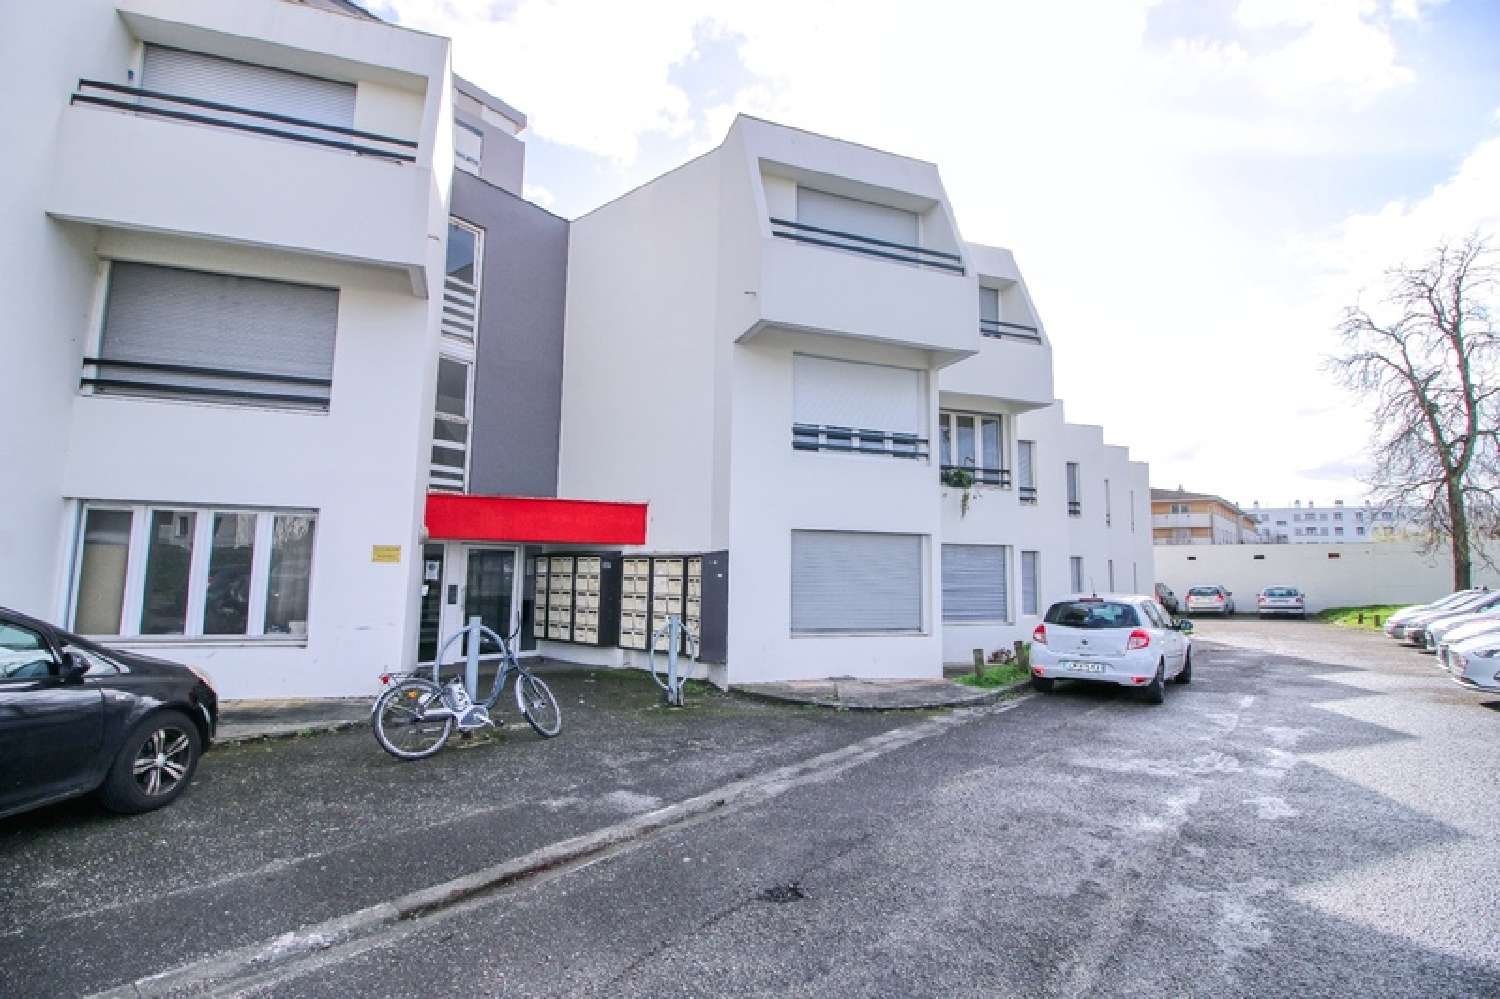  à vendre appartement Talence Gironde 1